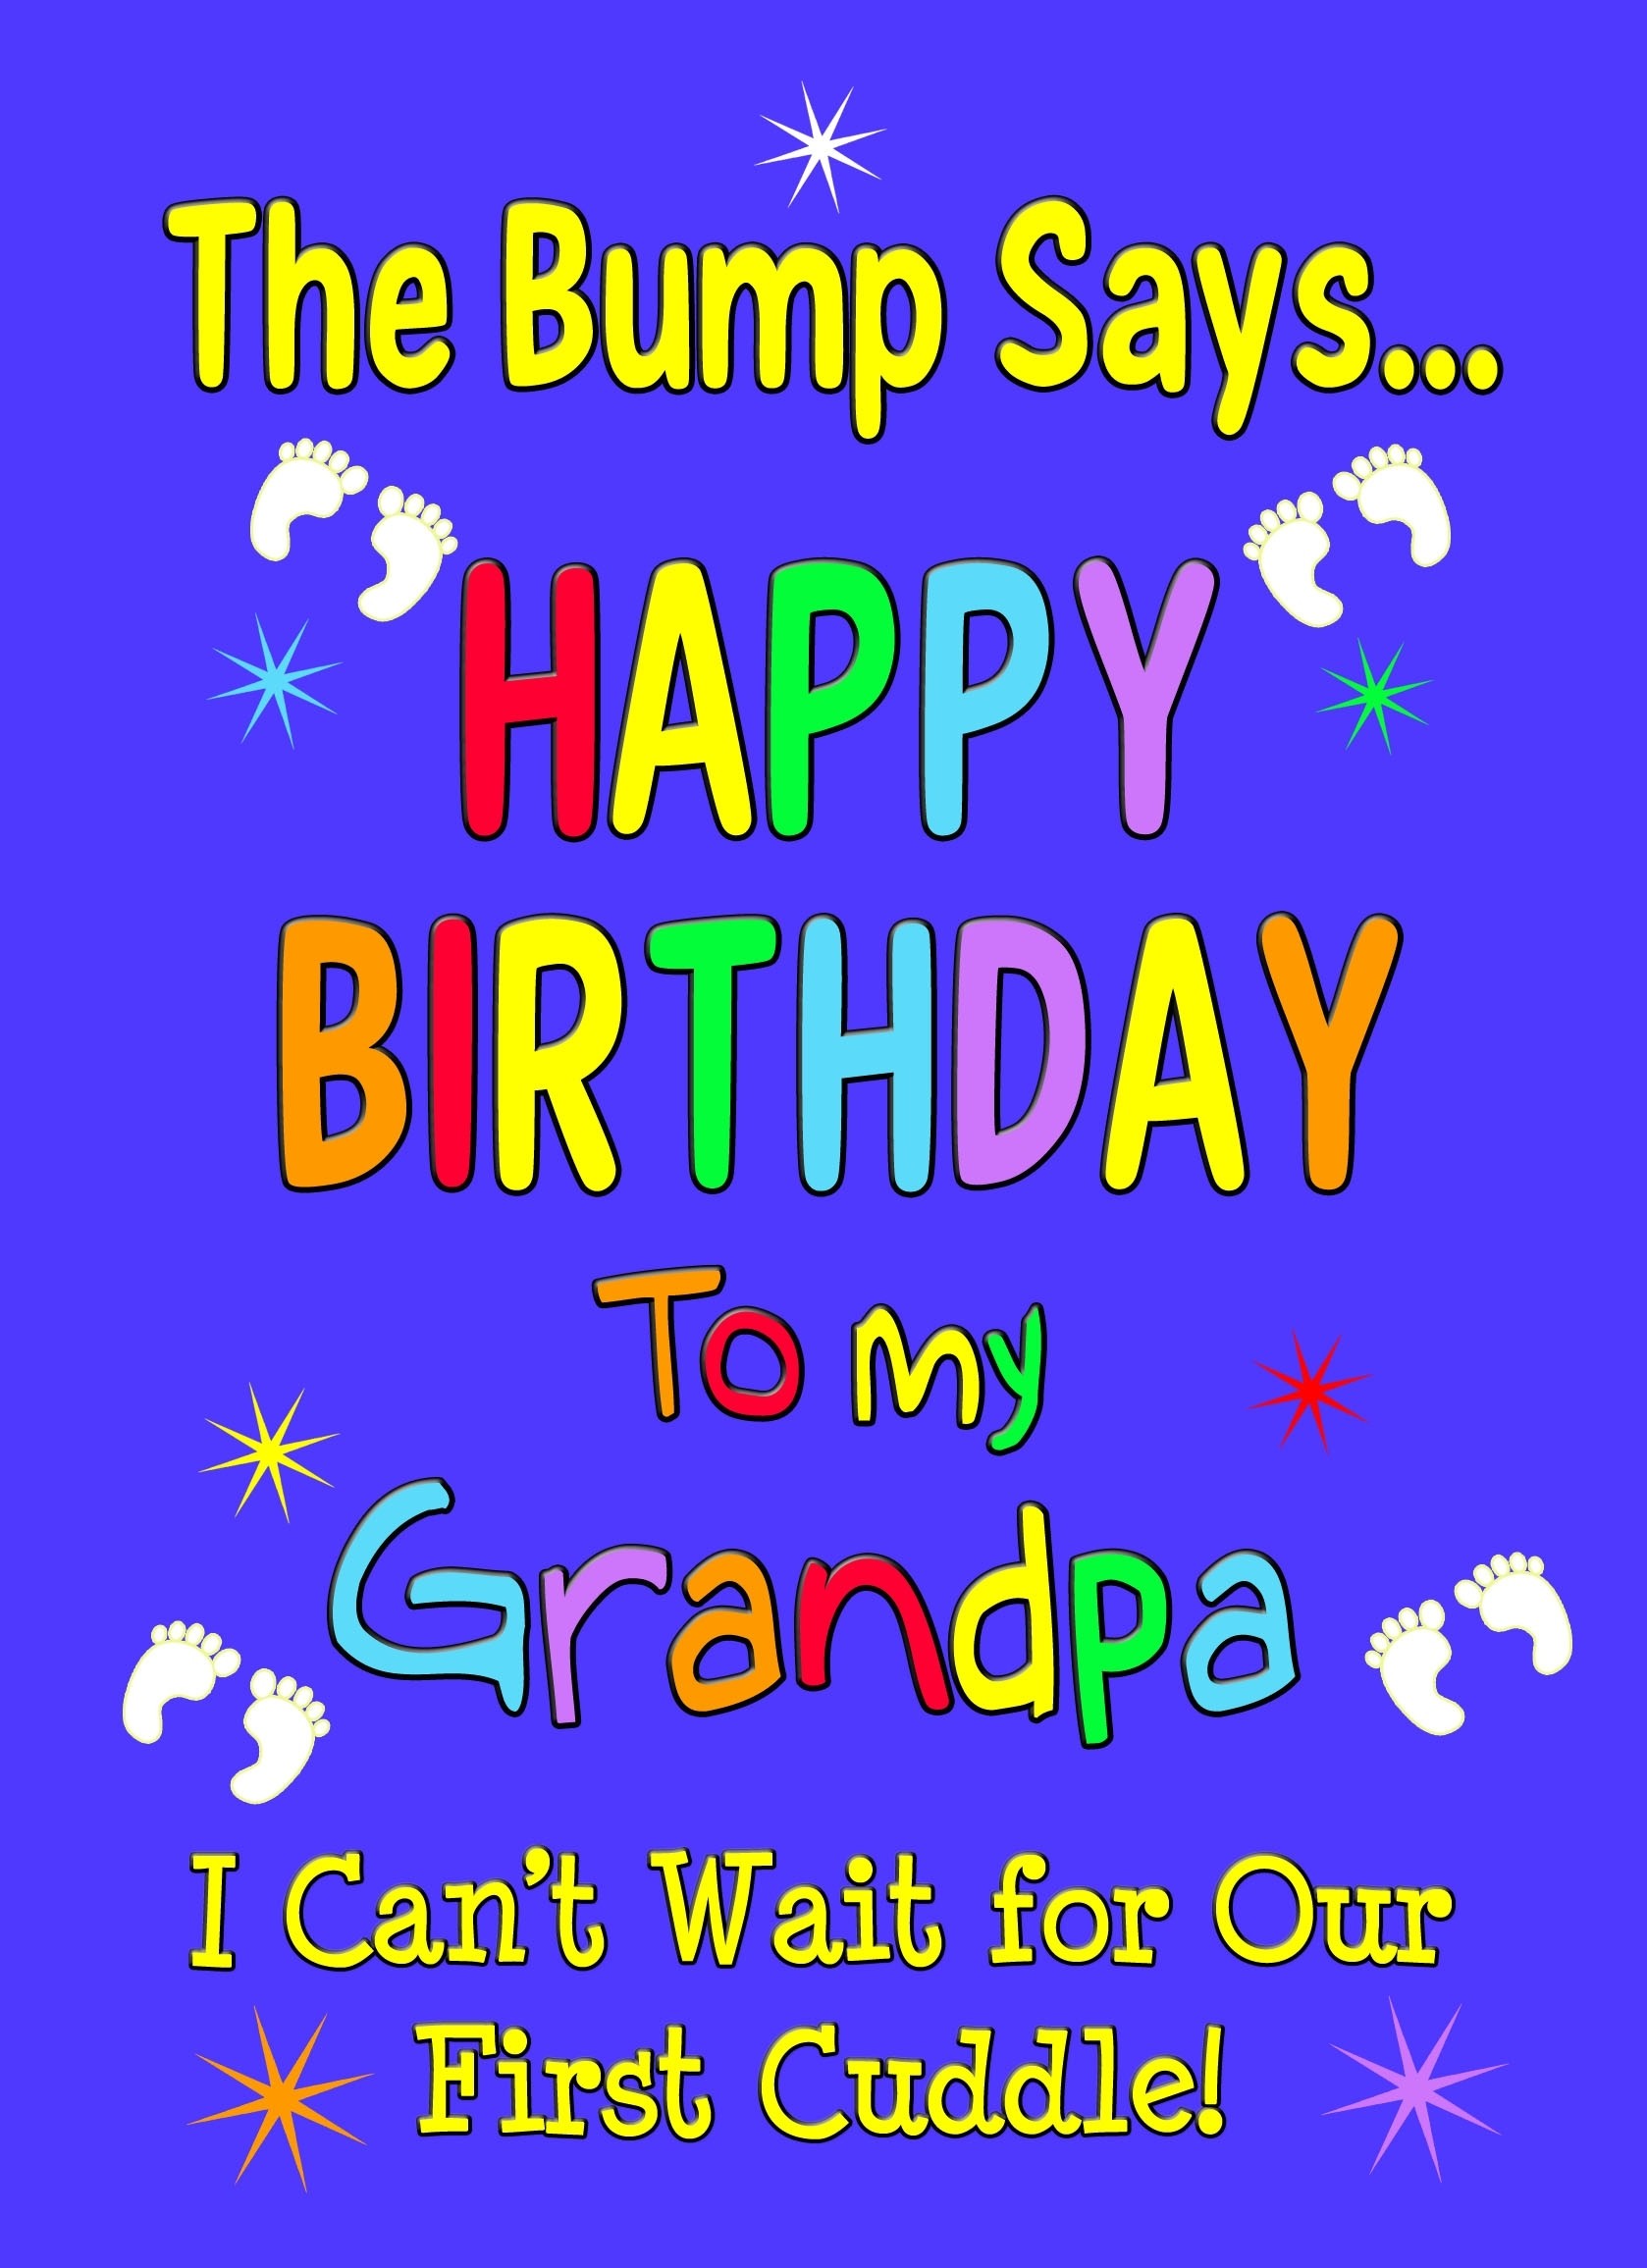 From The Bump Pregnancy Birthday Card (Grandpa, Blue)